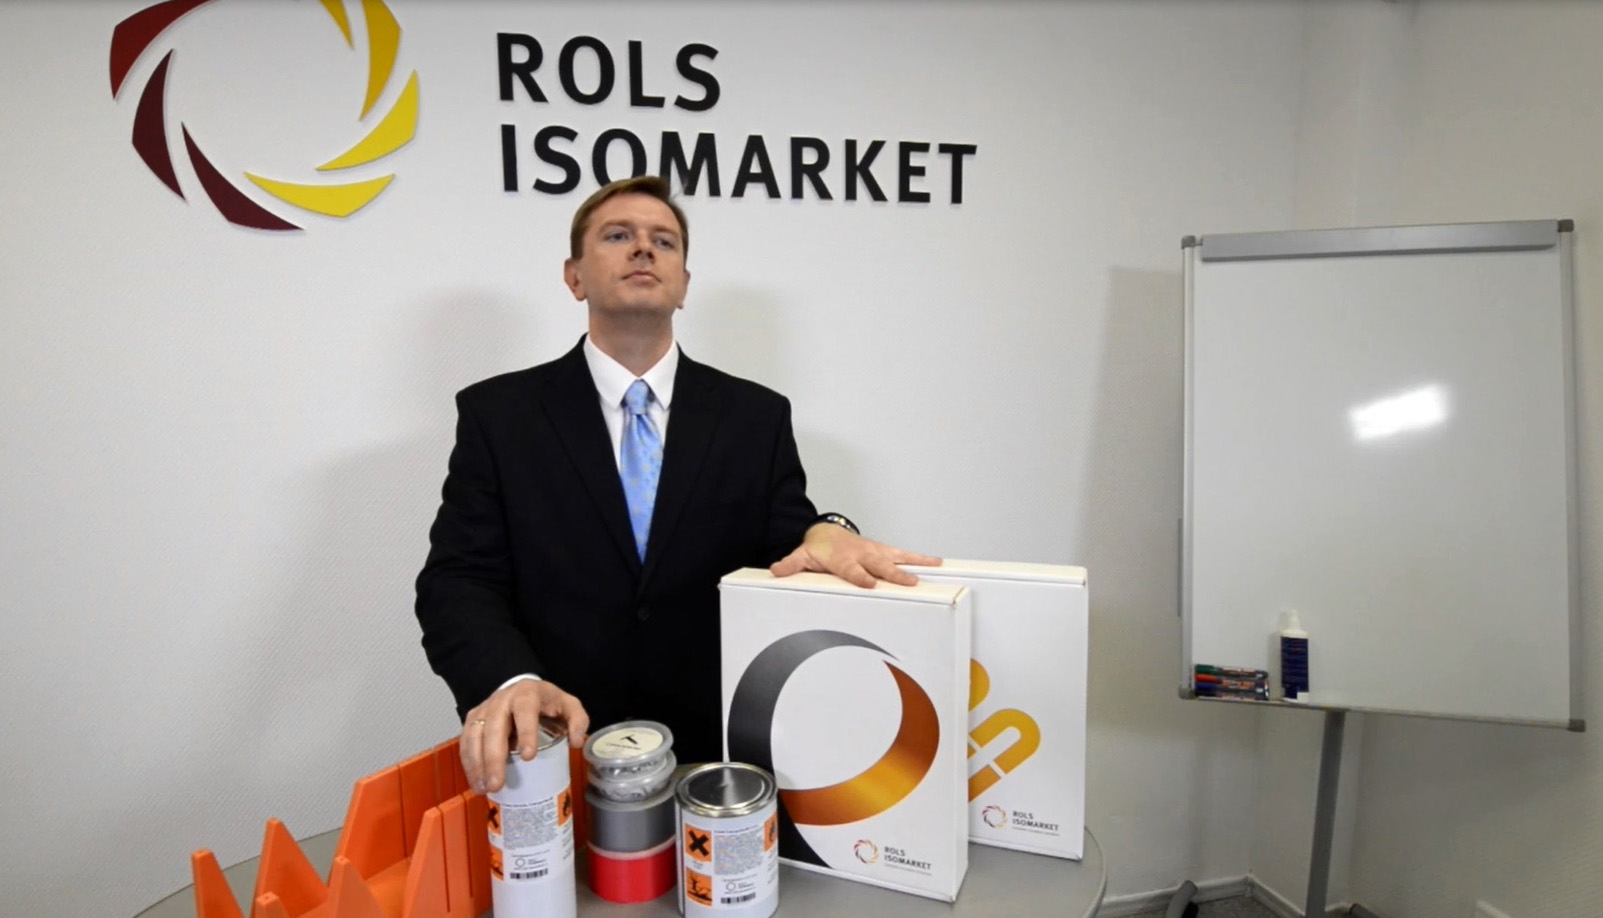 Обновленная презентация ROLS ISOMARKET